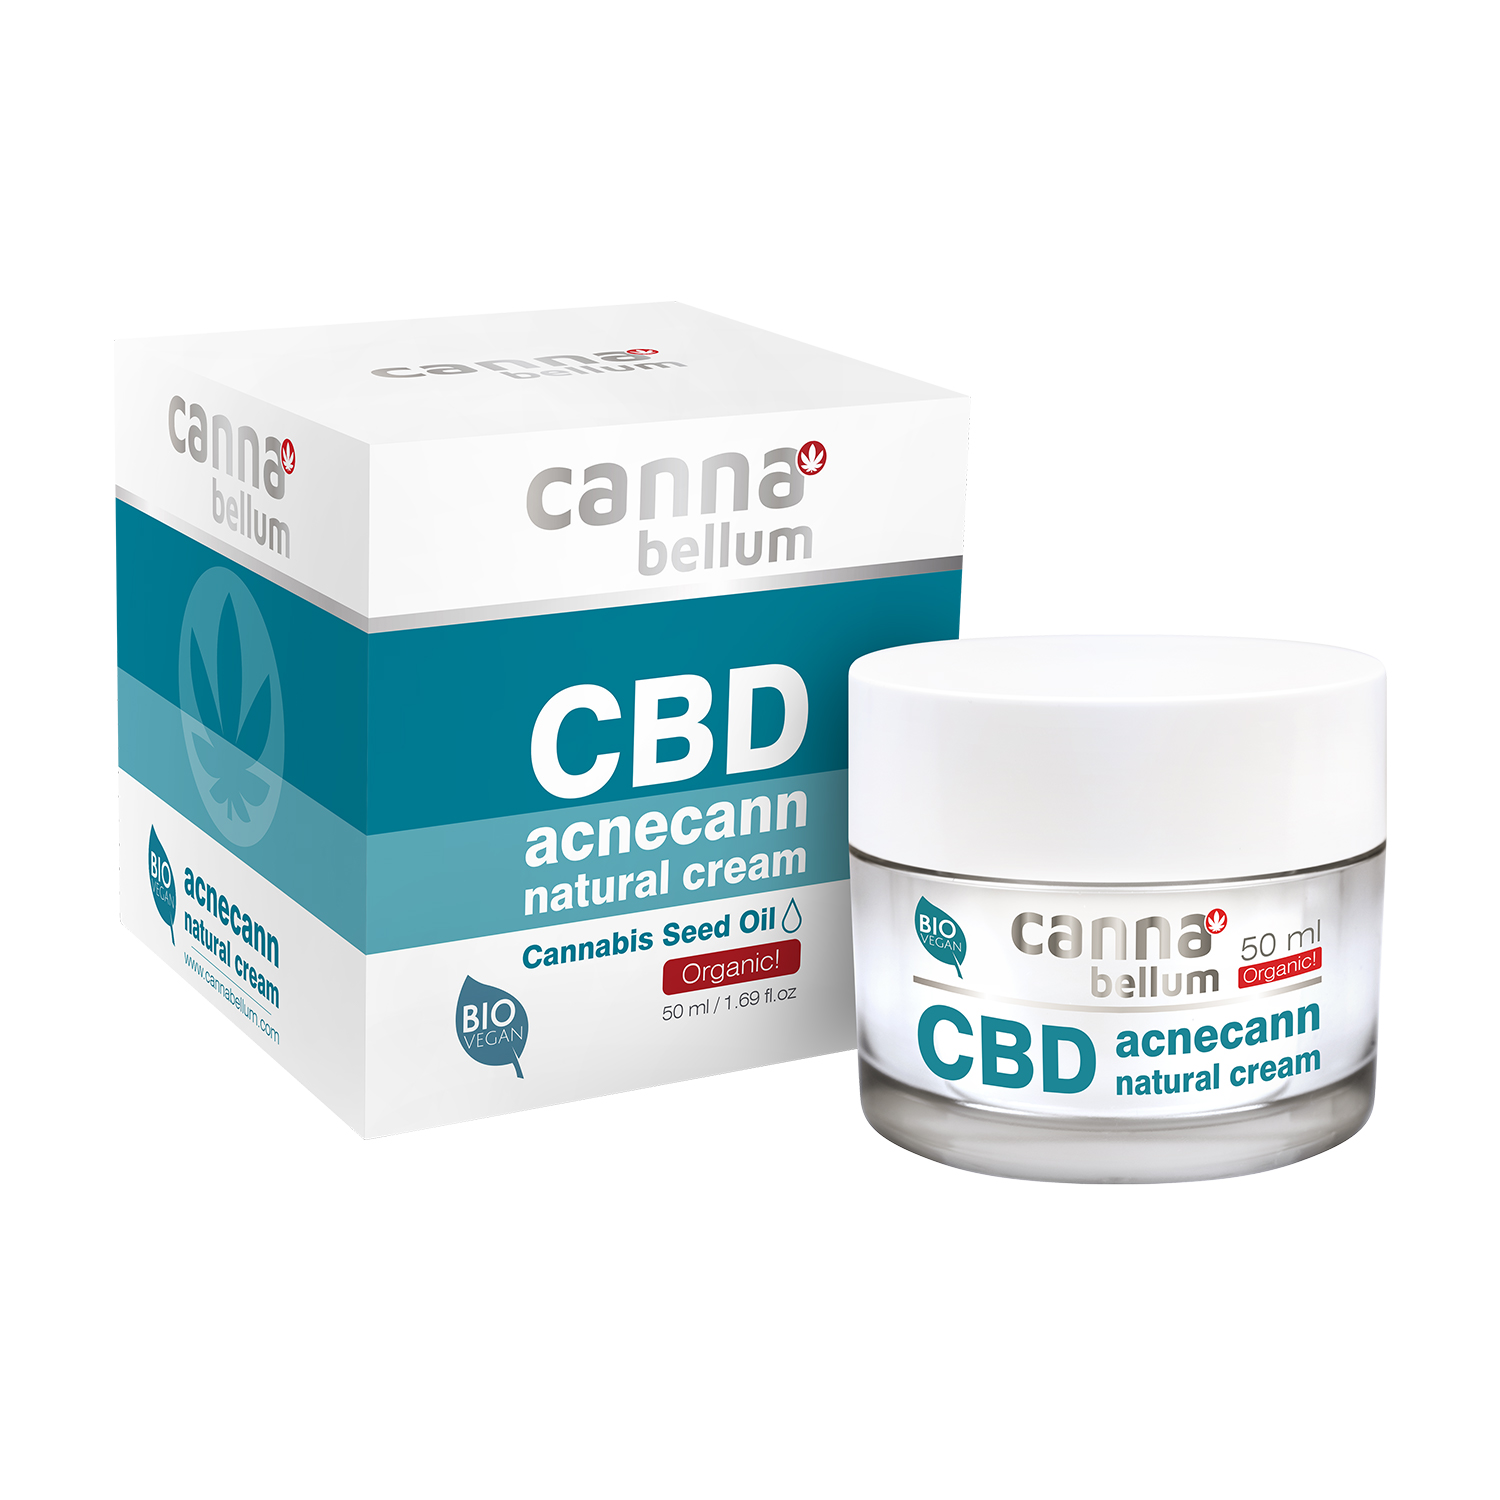 Cannabellum CBD acnecann natural cream 50ml P1244 komplet WEB 48